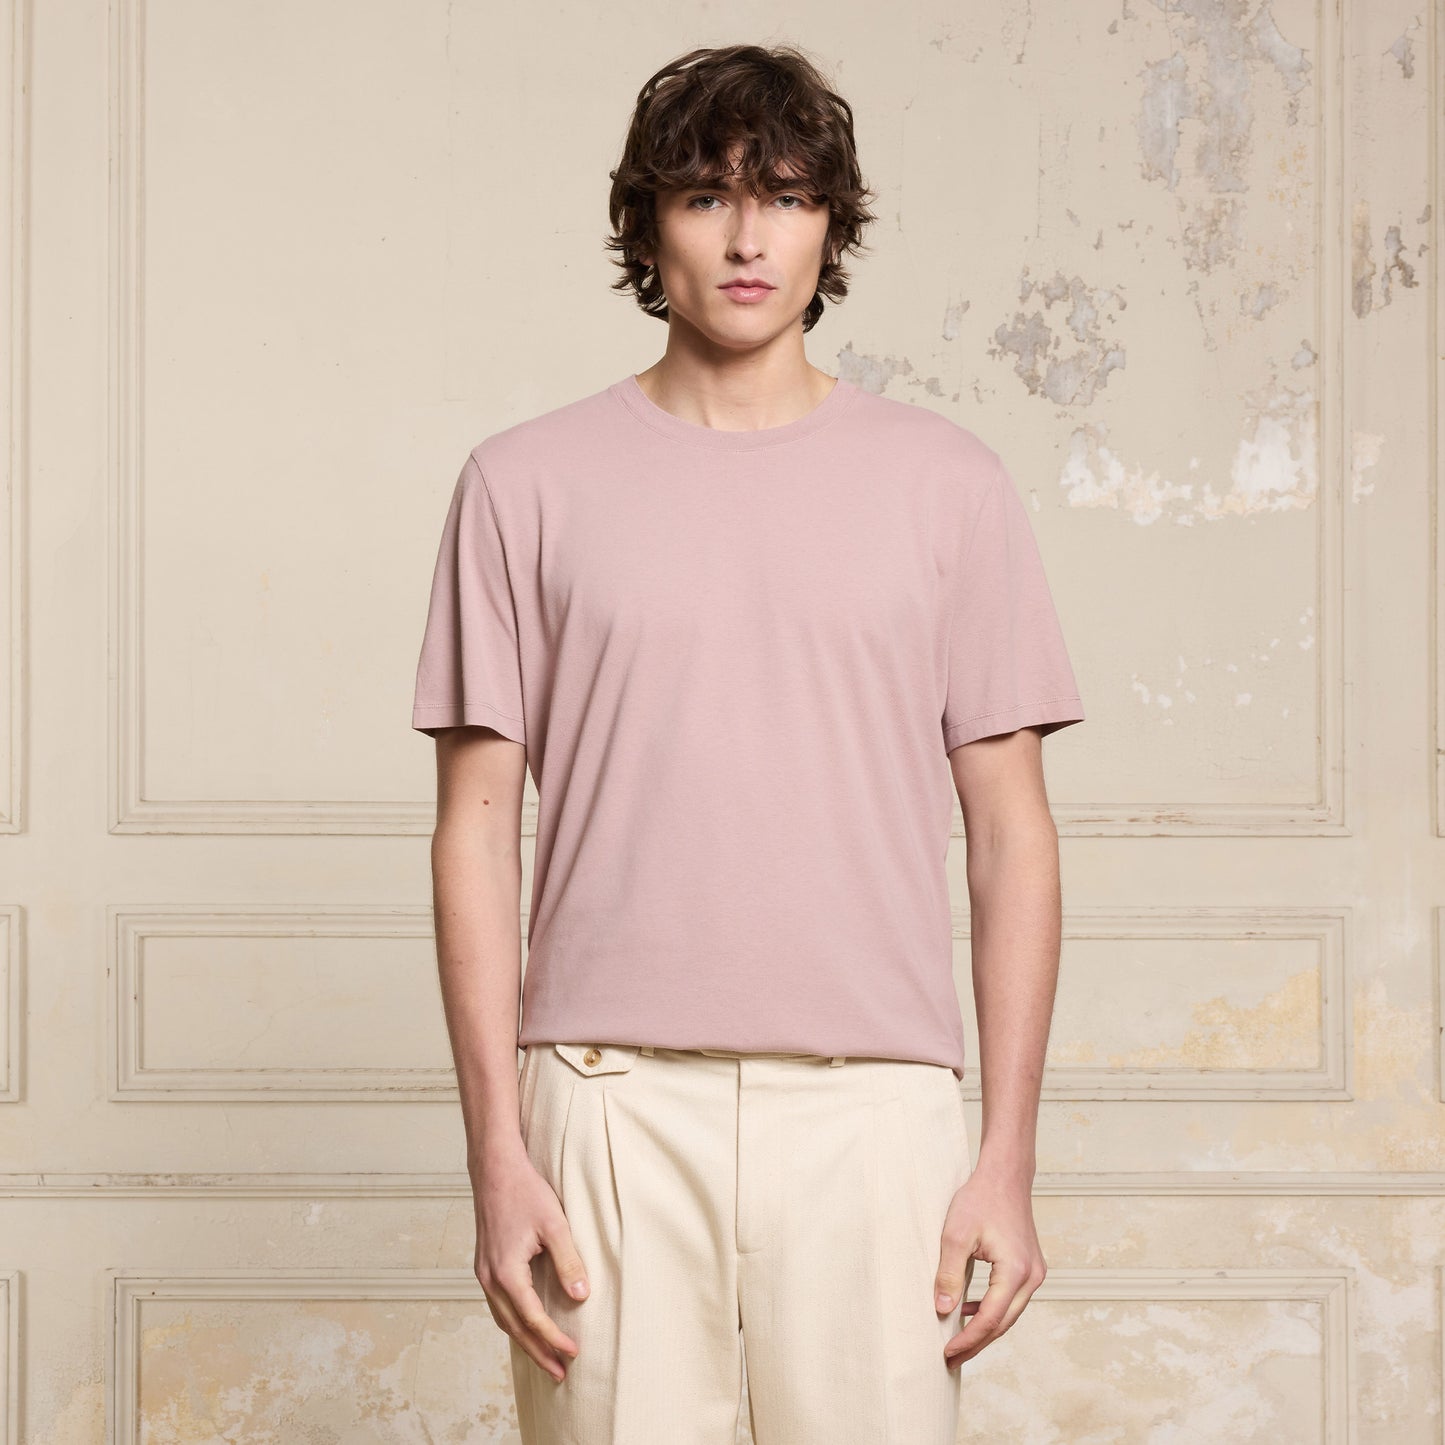 T-shirt rose pâle